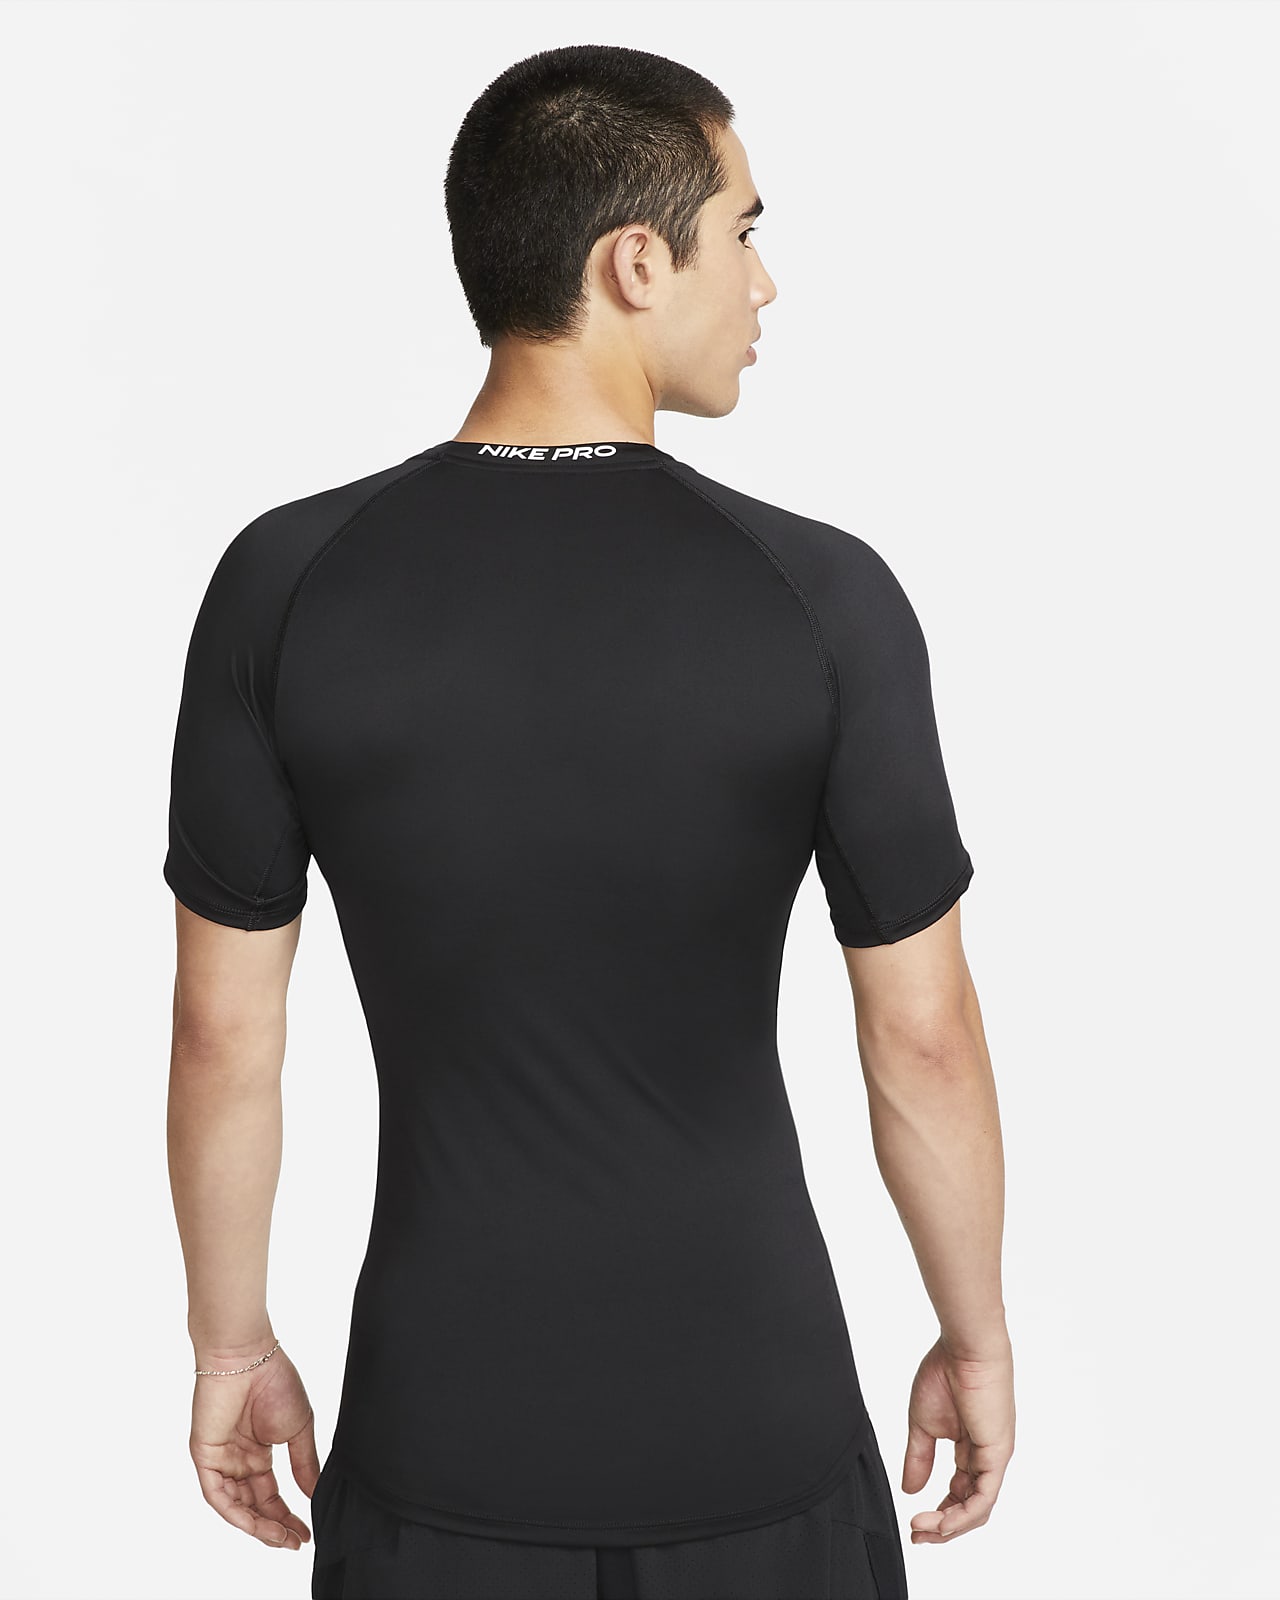 Nike Pro Mens T Shirt Dri Fit Training Gym Short Sleeve Sports Activewear  Tee